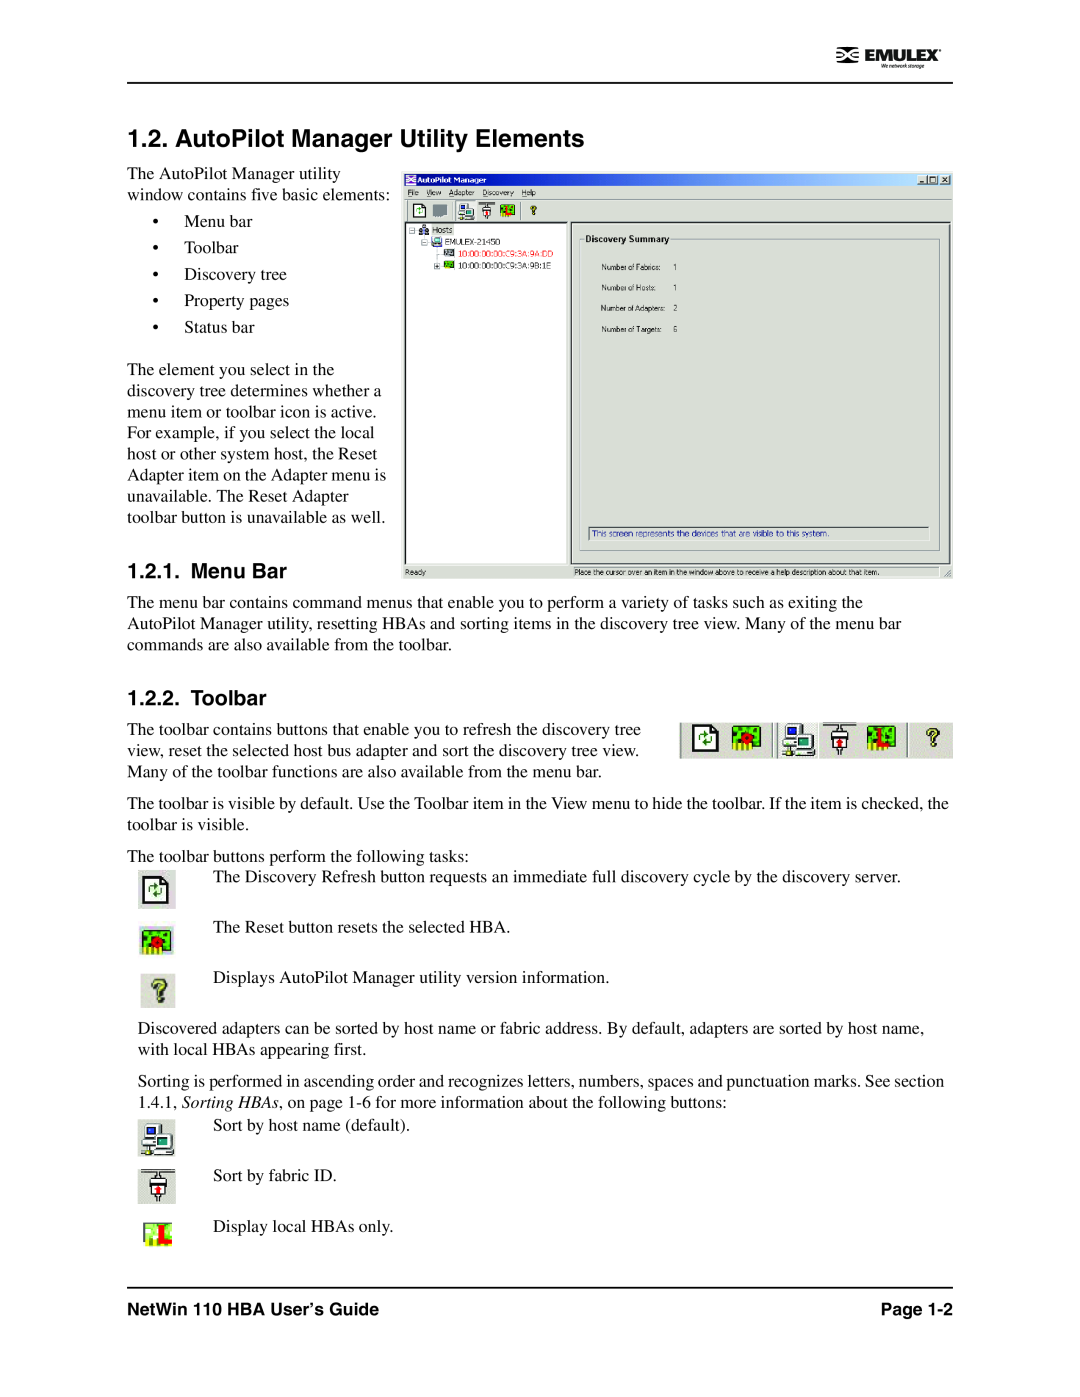 Emulex manual AutoPilot Manager Utility Elements, Menu Bar, Toolbar, NetWin 110 HBA User’s Guide, Page 